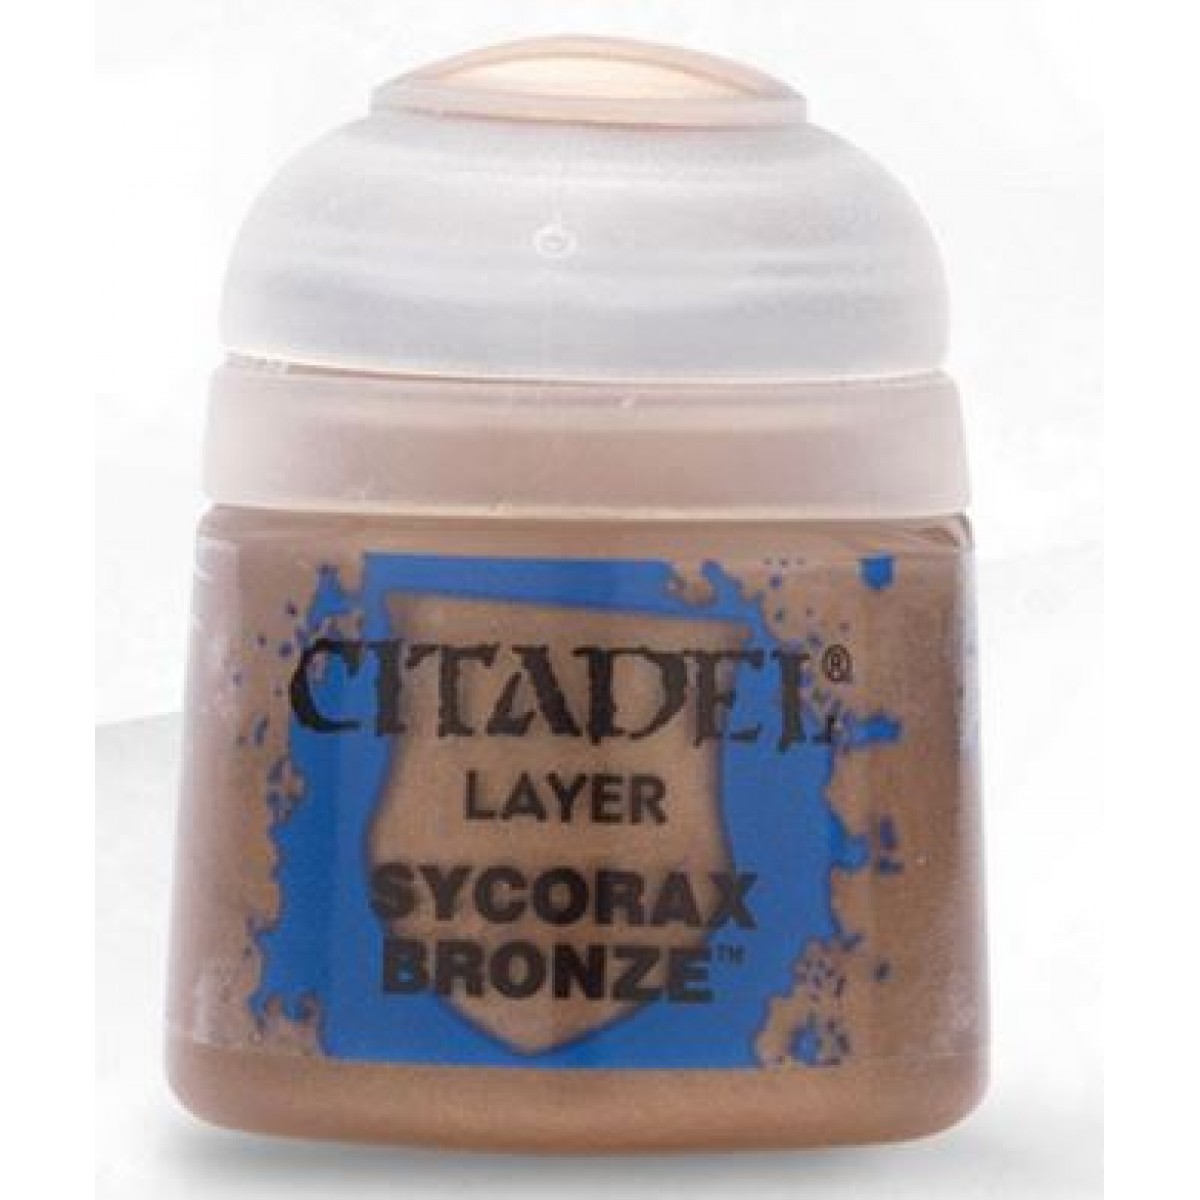 Citadel Paint: Layer - Sycorax Bronze